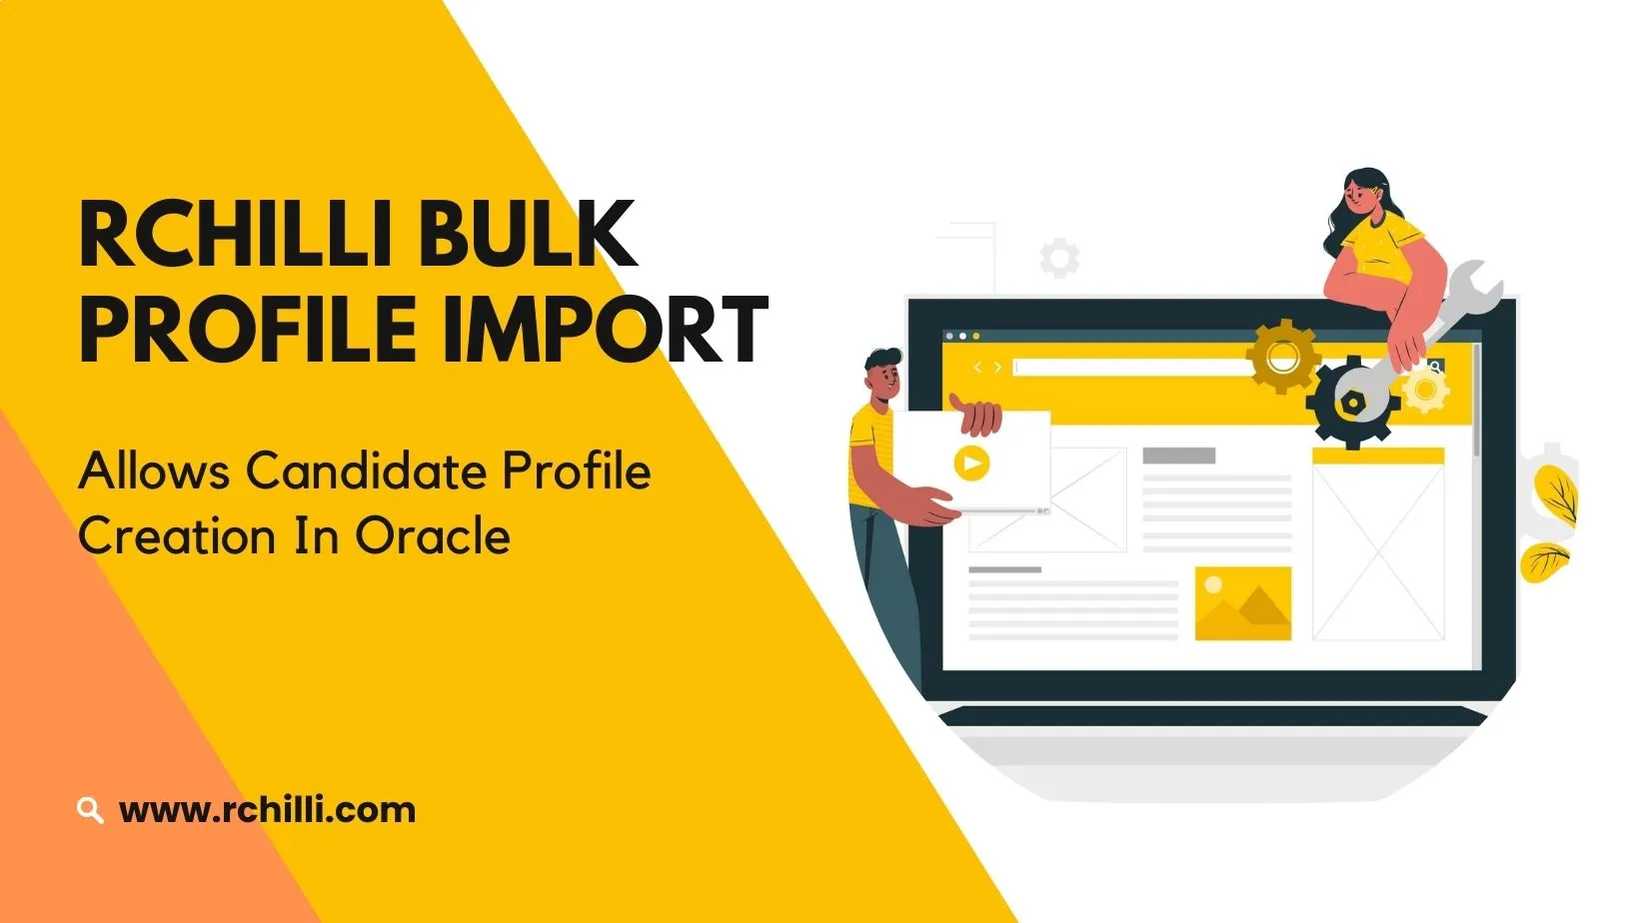 RChilli Bulk Profile Import - Allows Candidate Profile Creation In Oracle